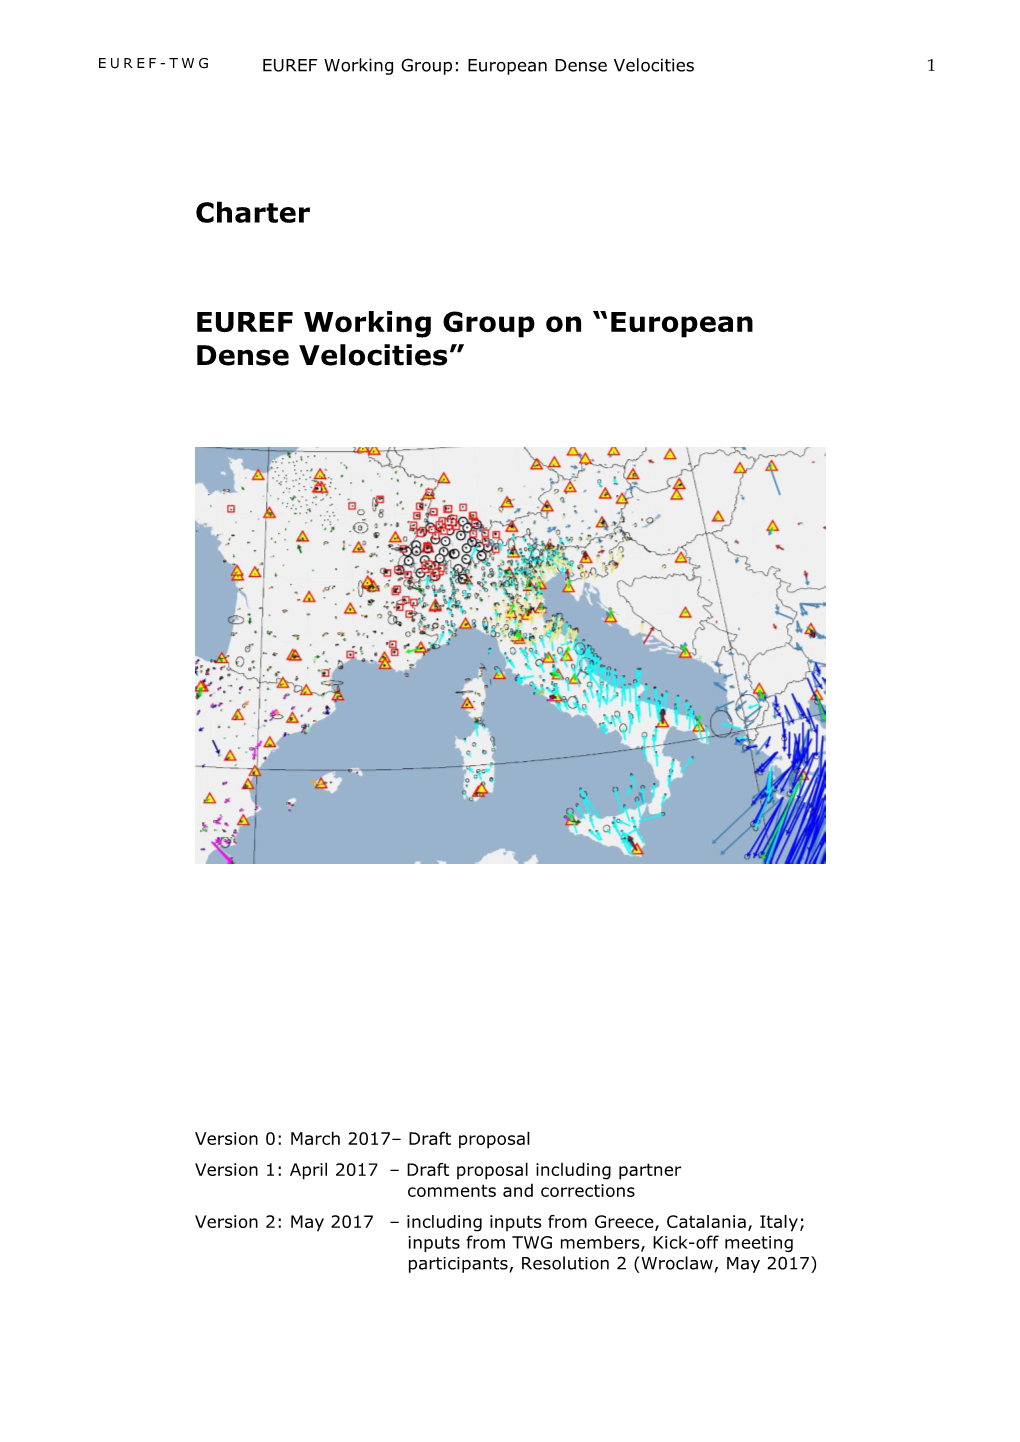 Charter EUREF Working Group on “European Dense Velocities”